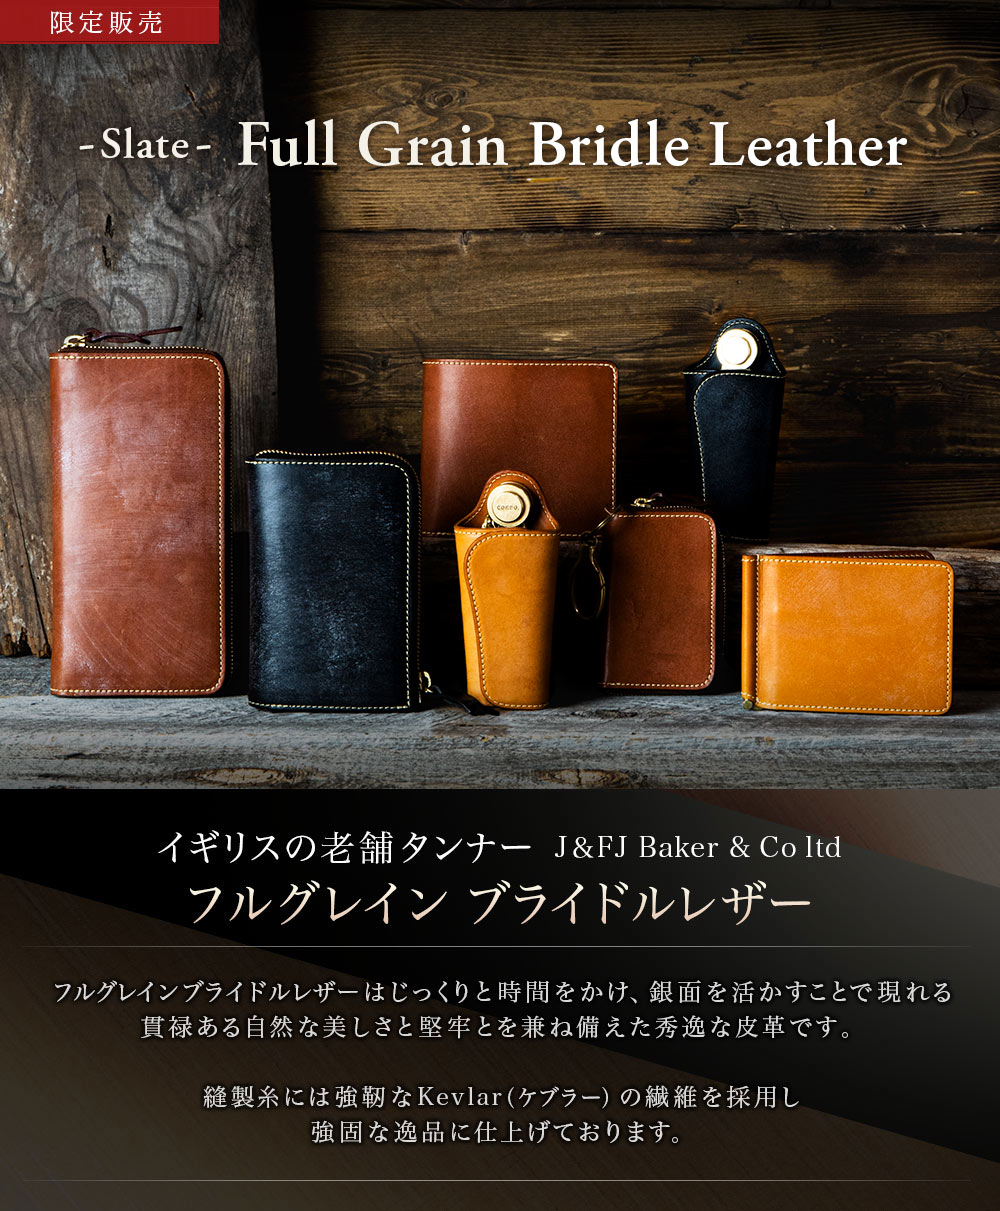 Slate - Full Grain Bridle Leather